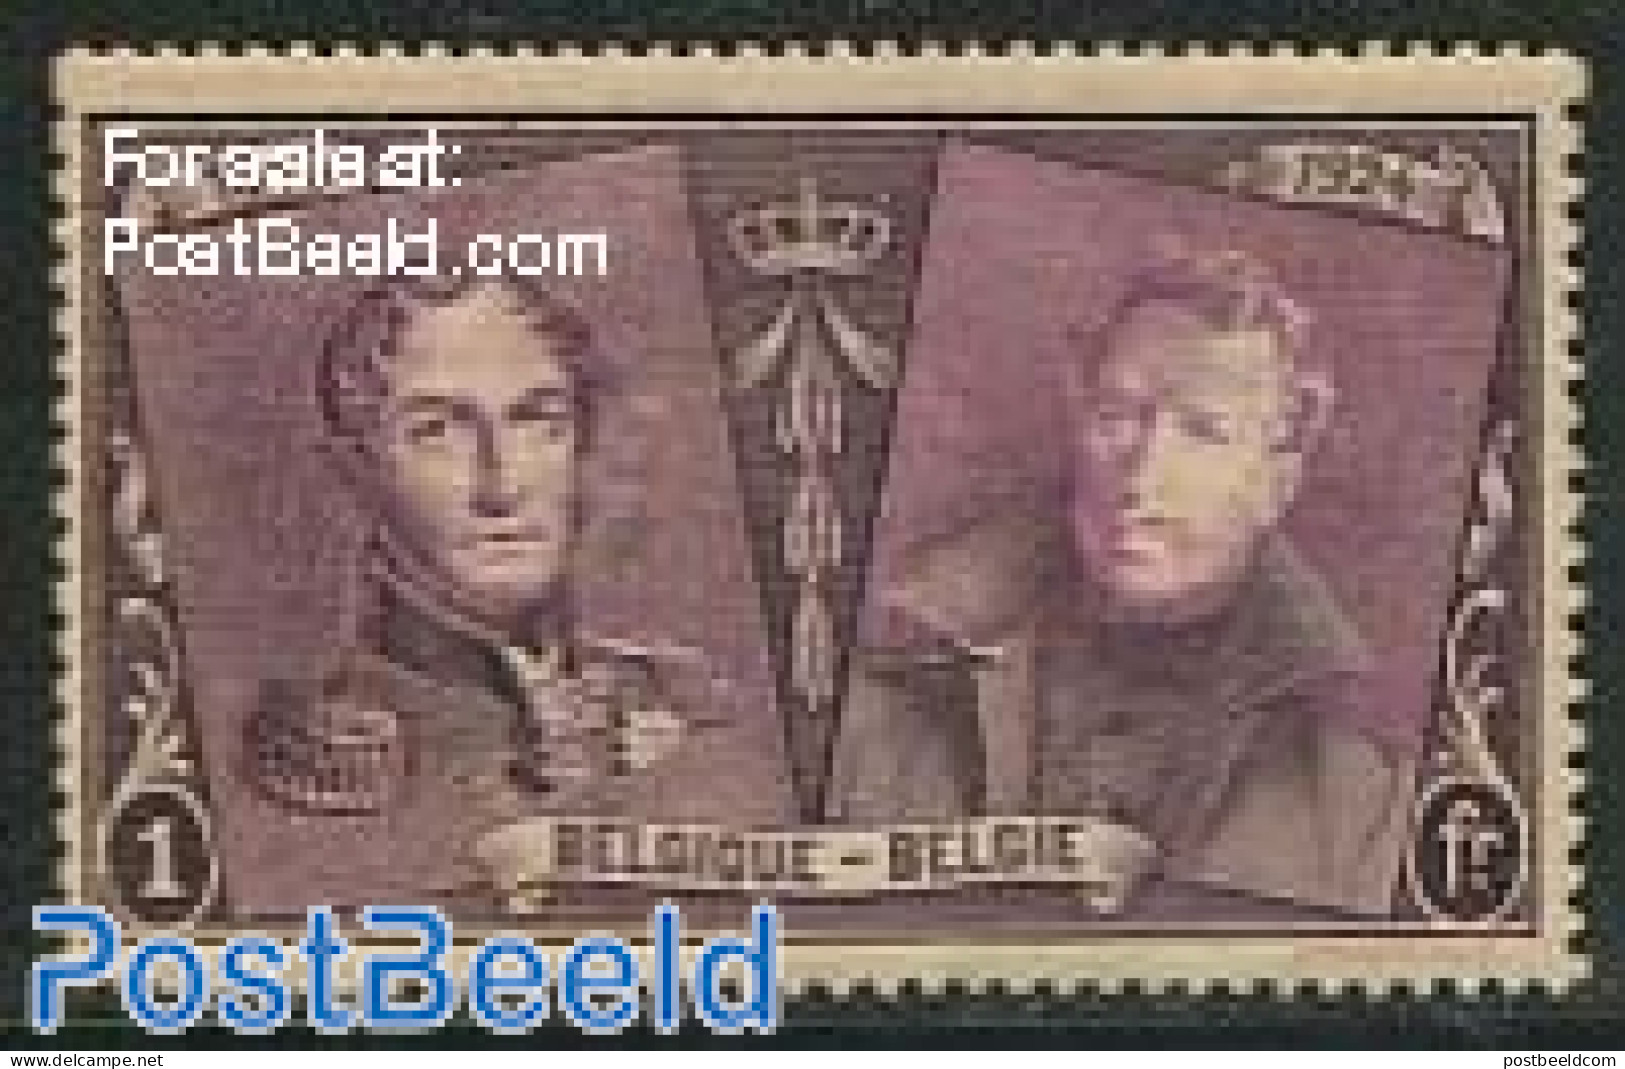 Belgium 1925 1Fr, Stamp Out Of Set, Mint NH - Ungebraucht